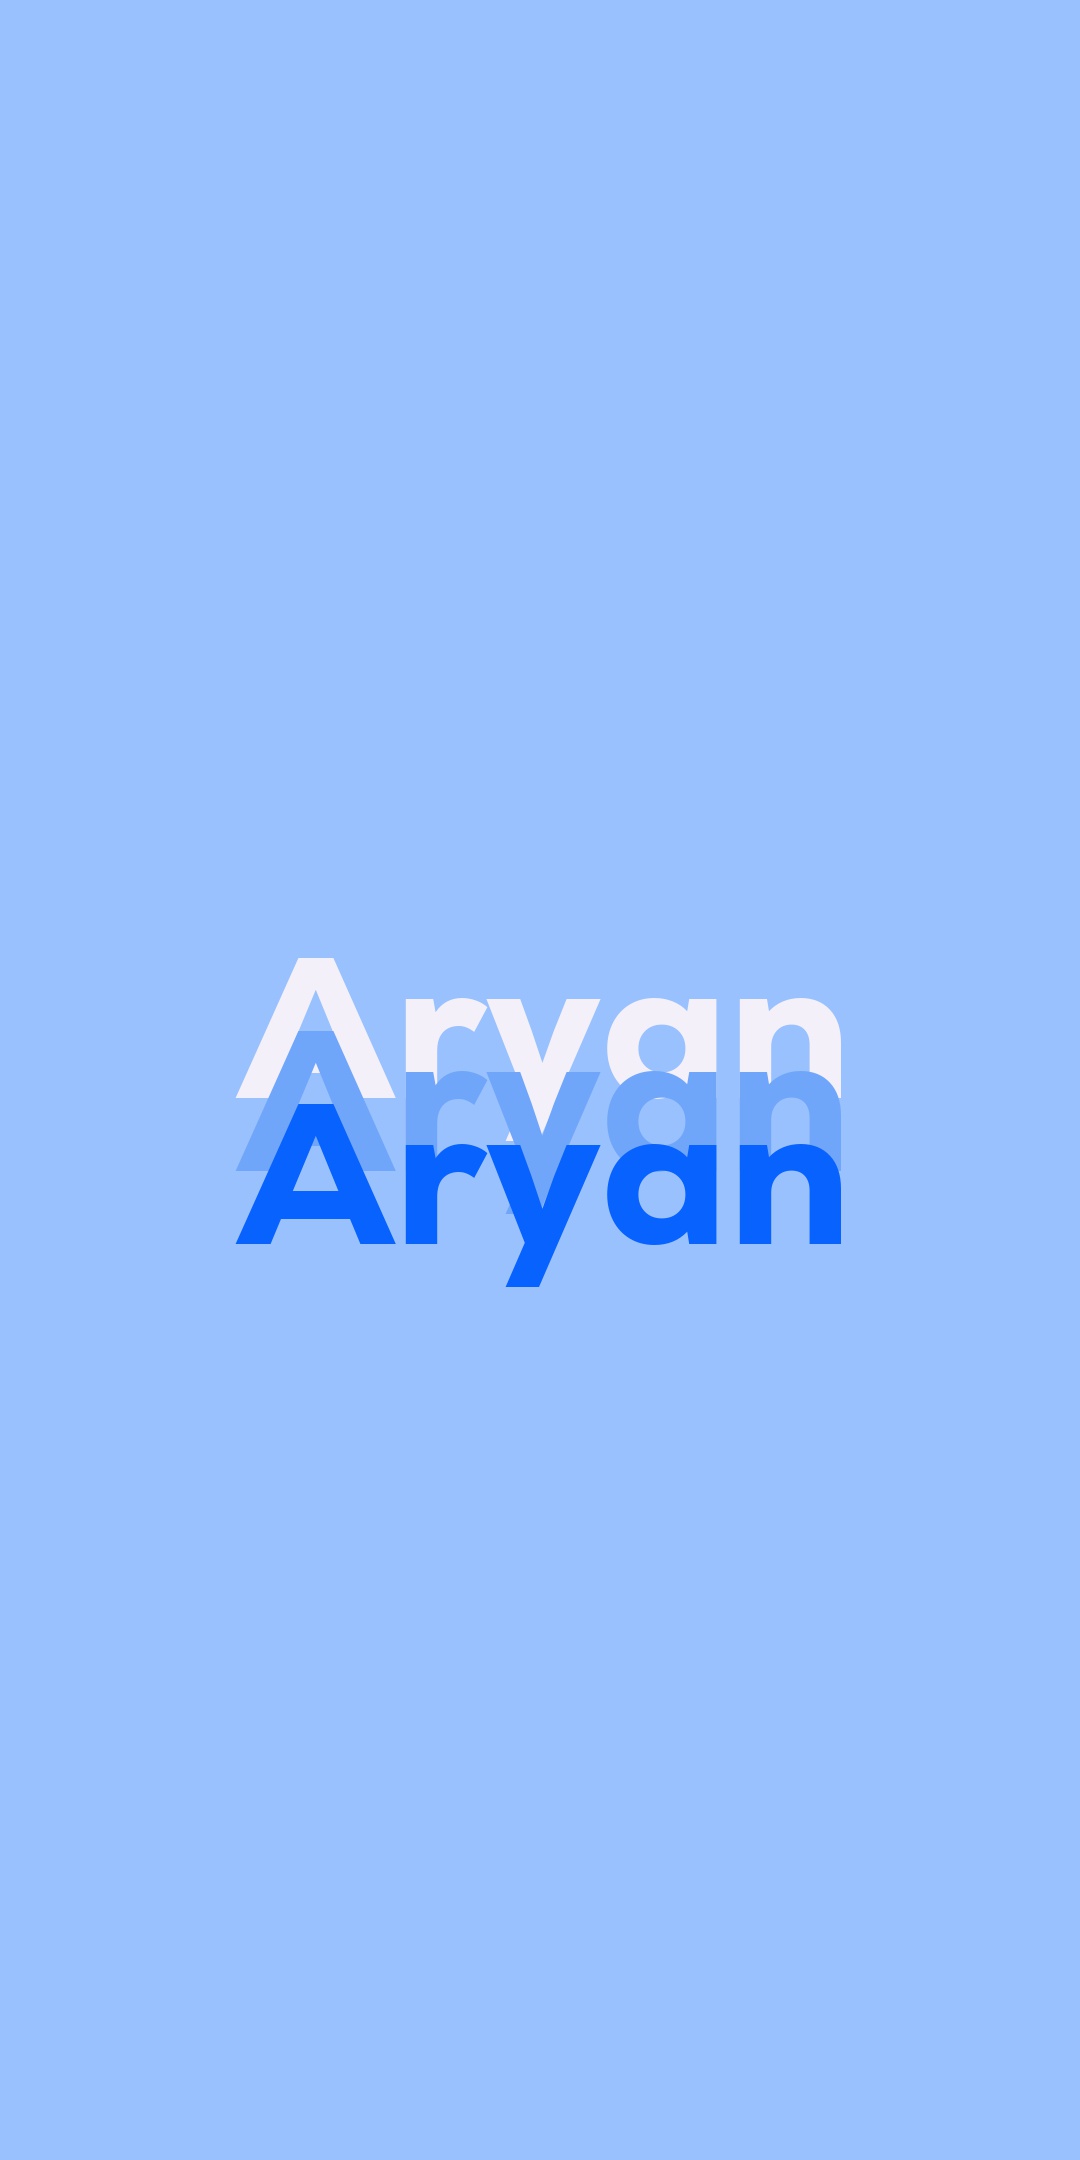 Aryan designer hub - Apps on Google Play